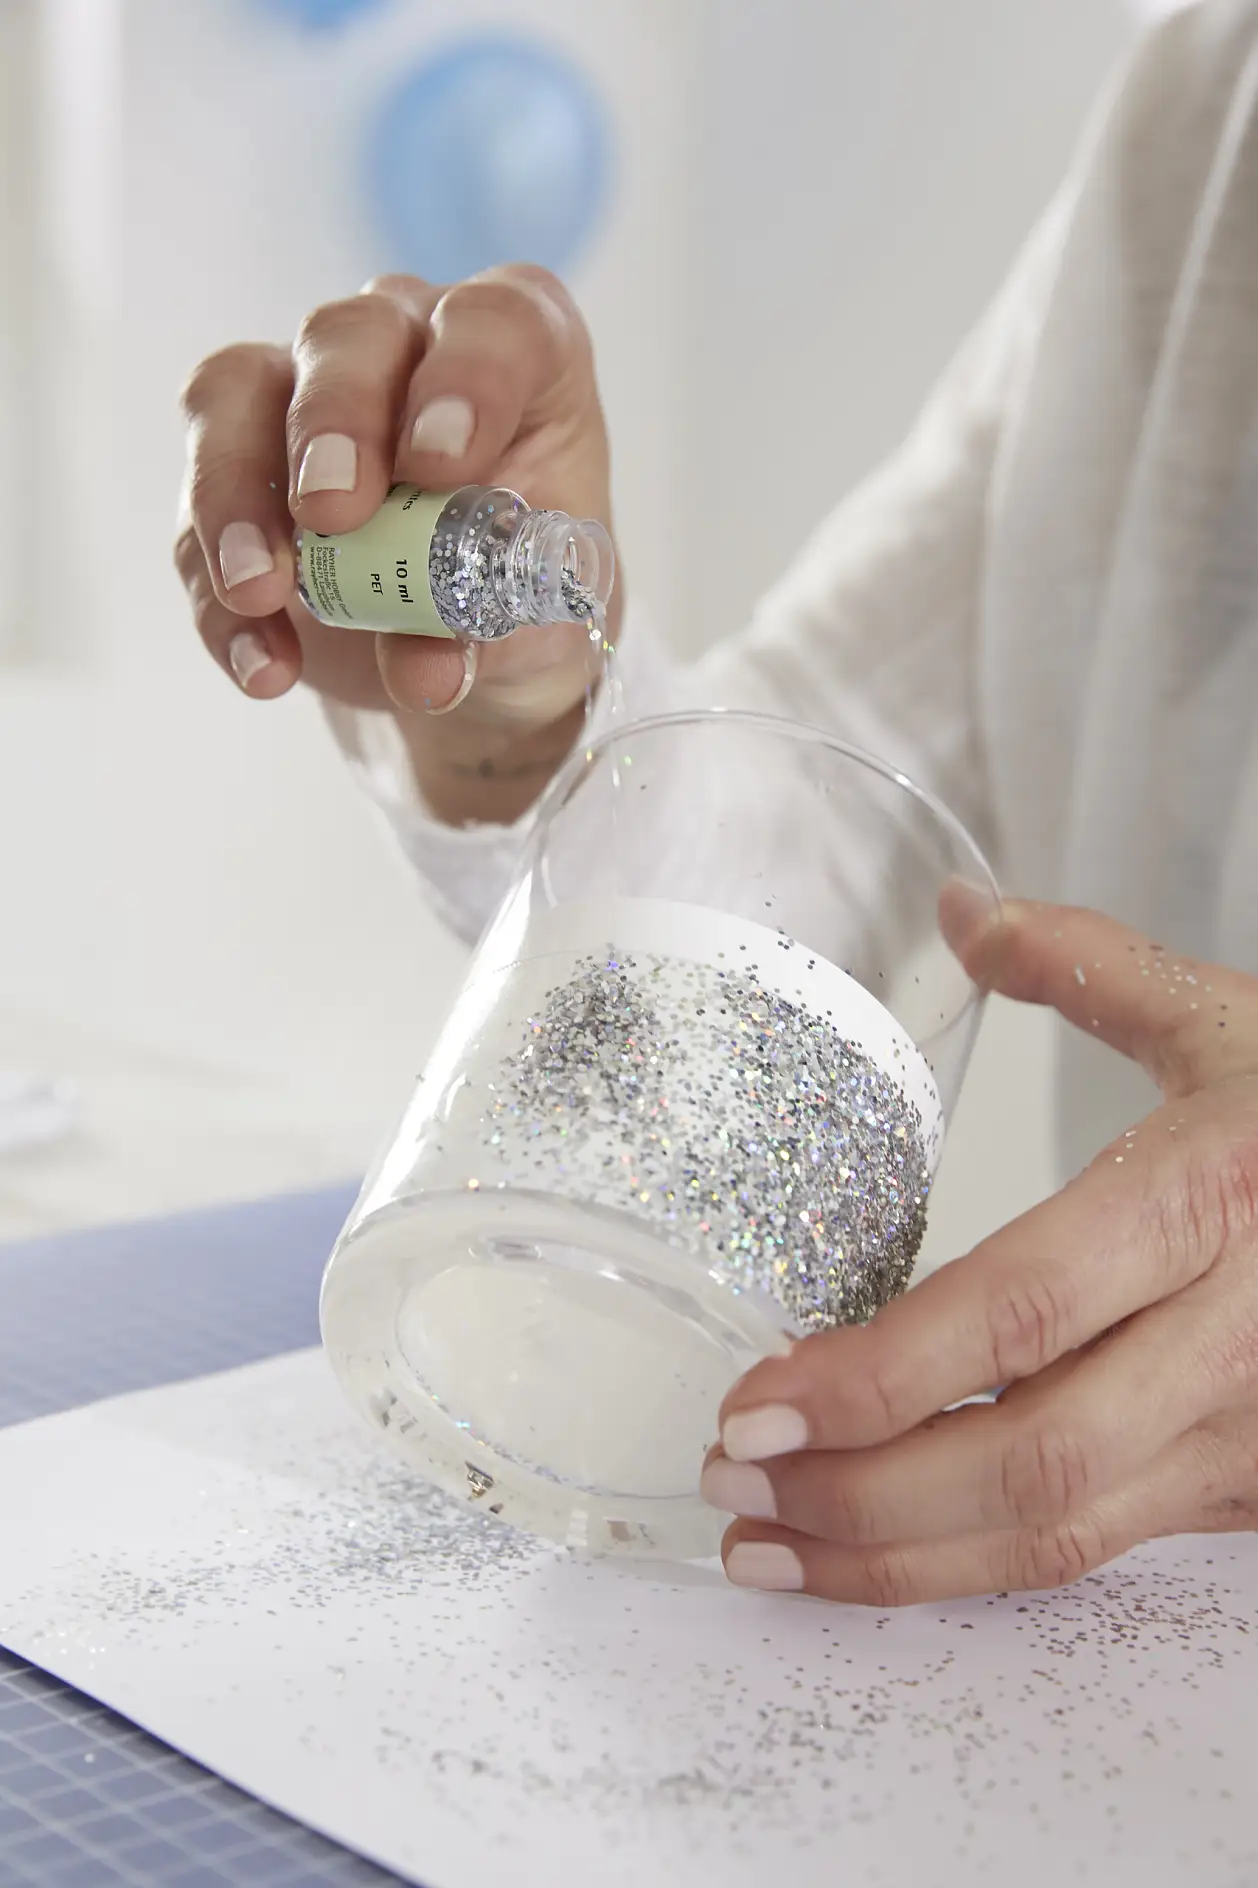 Sprinkle with glitter powder.